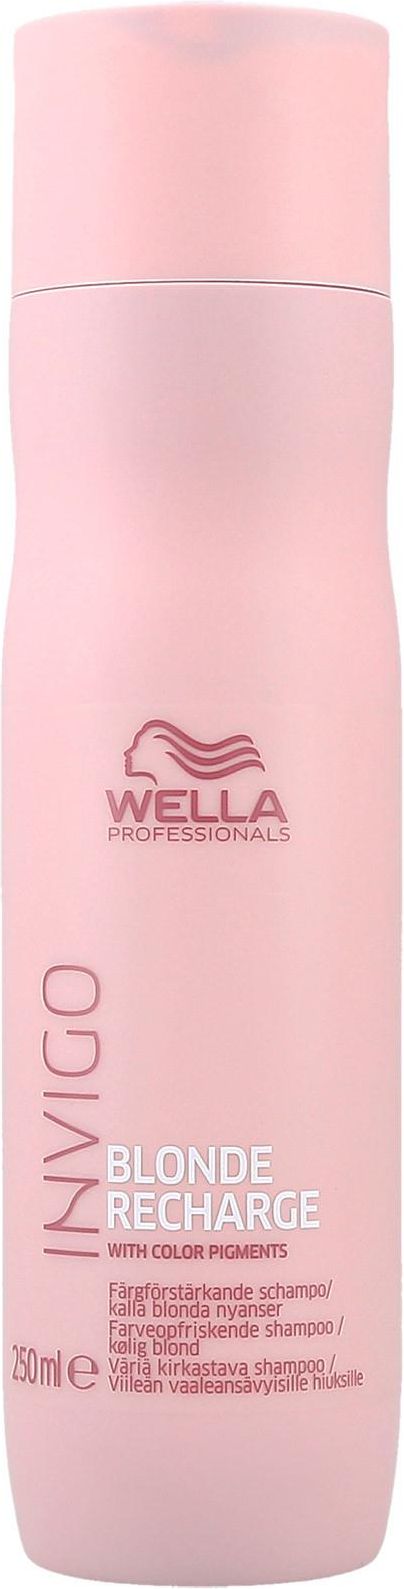 szampon fioletowy wella